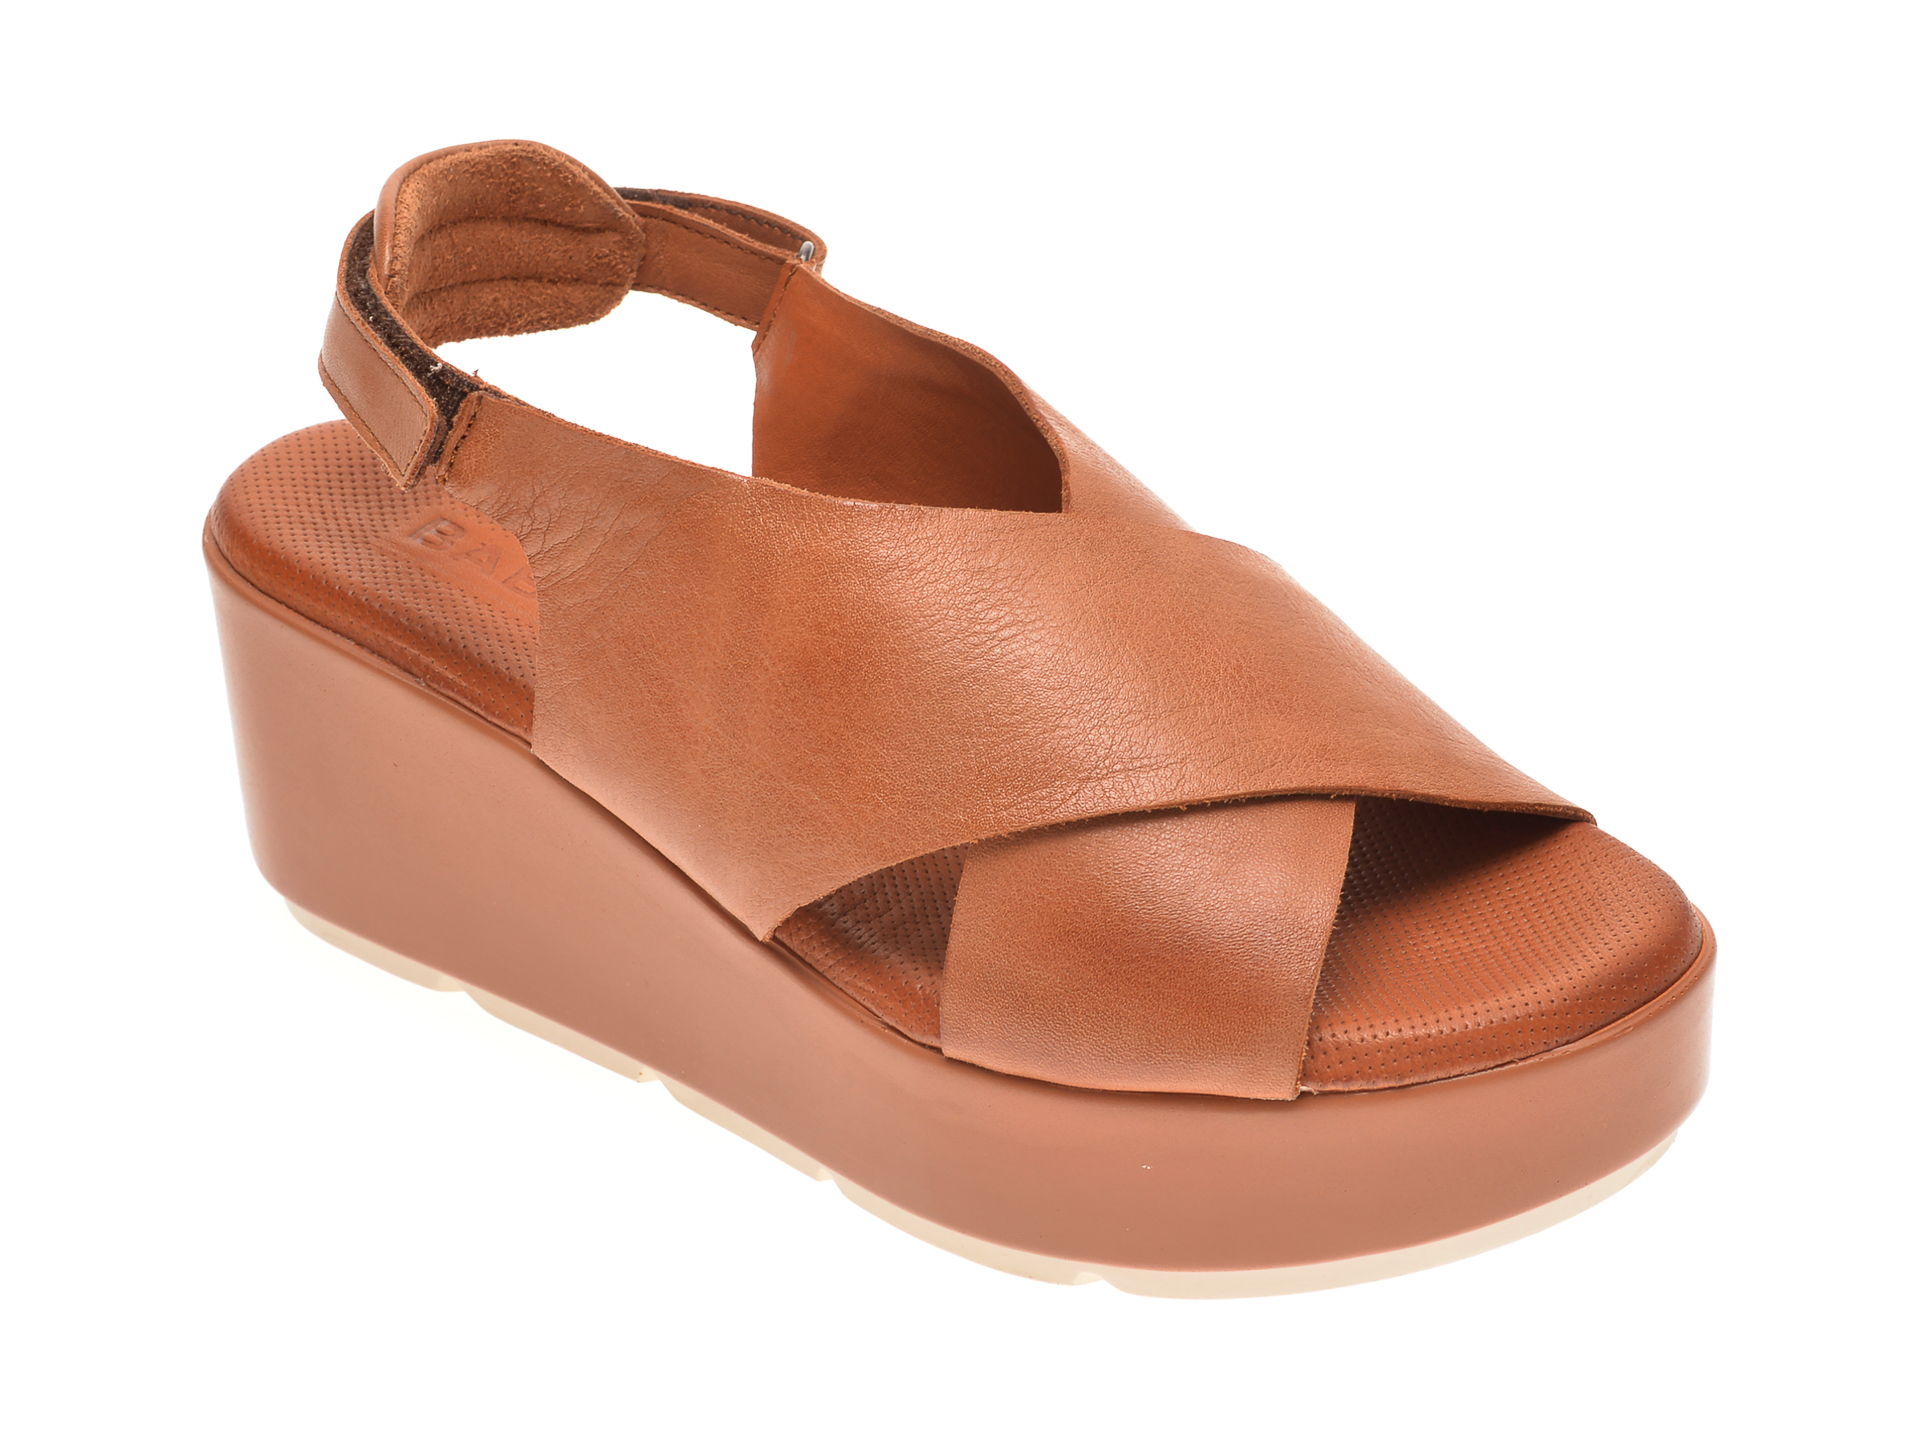 Sandale BABOOS maro, 2520, din piele naturala